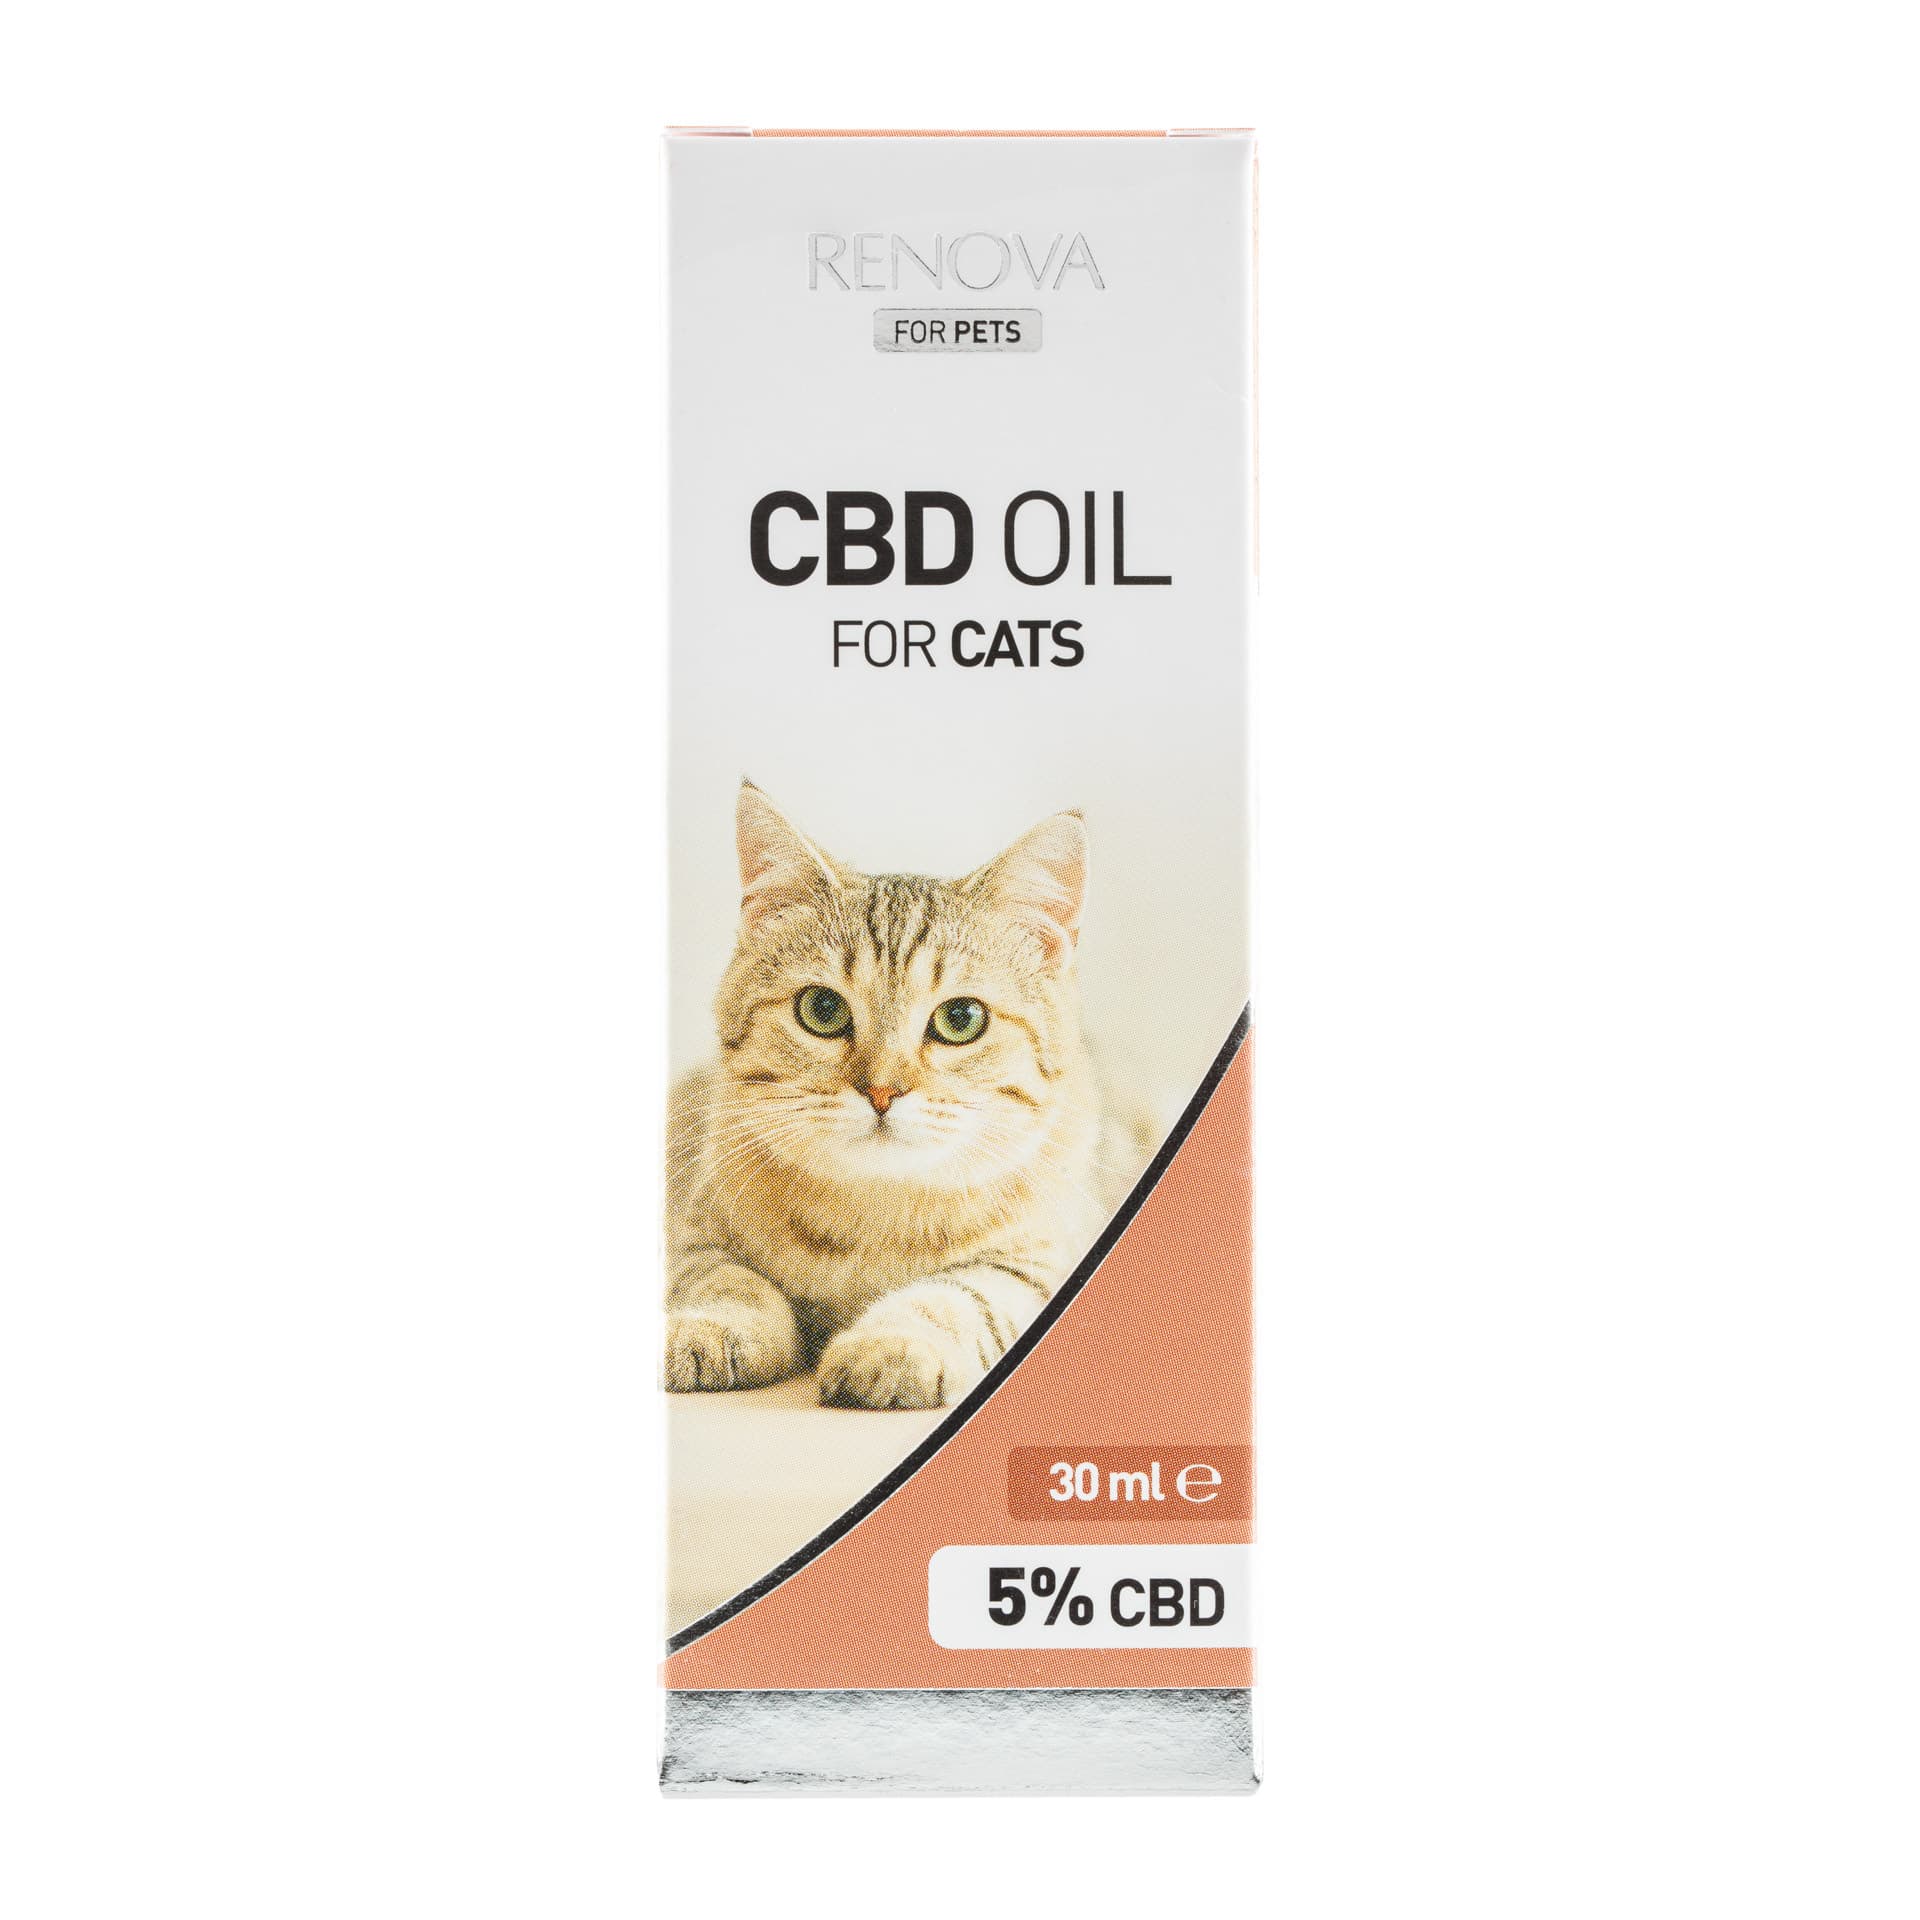 A box of Renova CBD oil 5% for cats (30ml) on a white background.